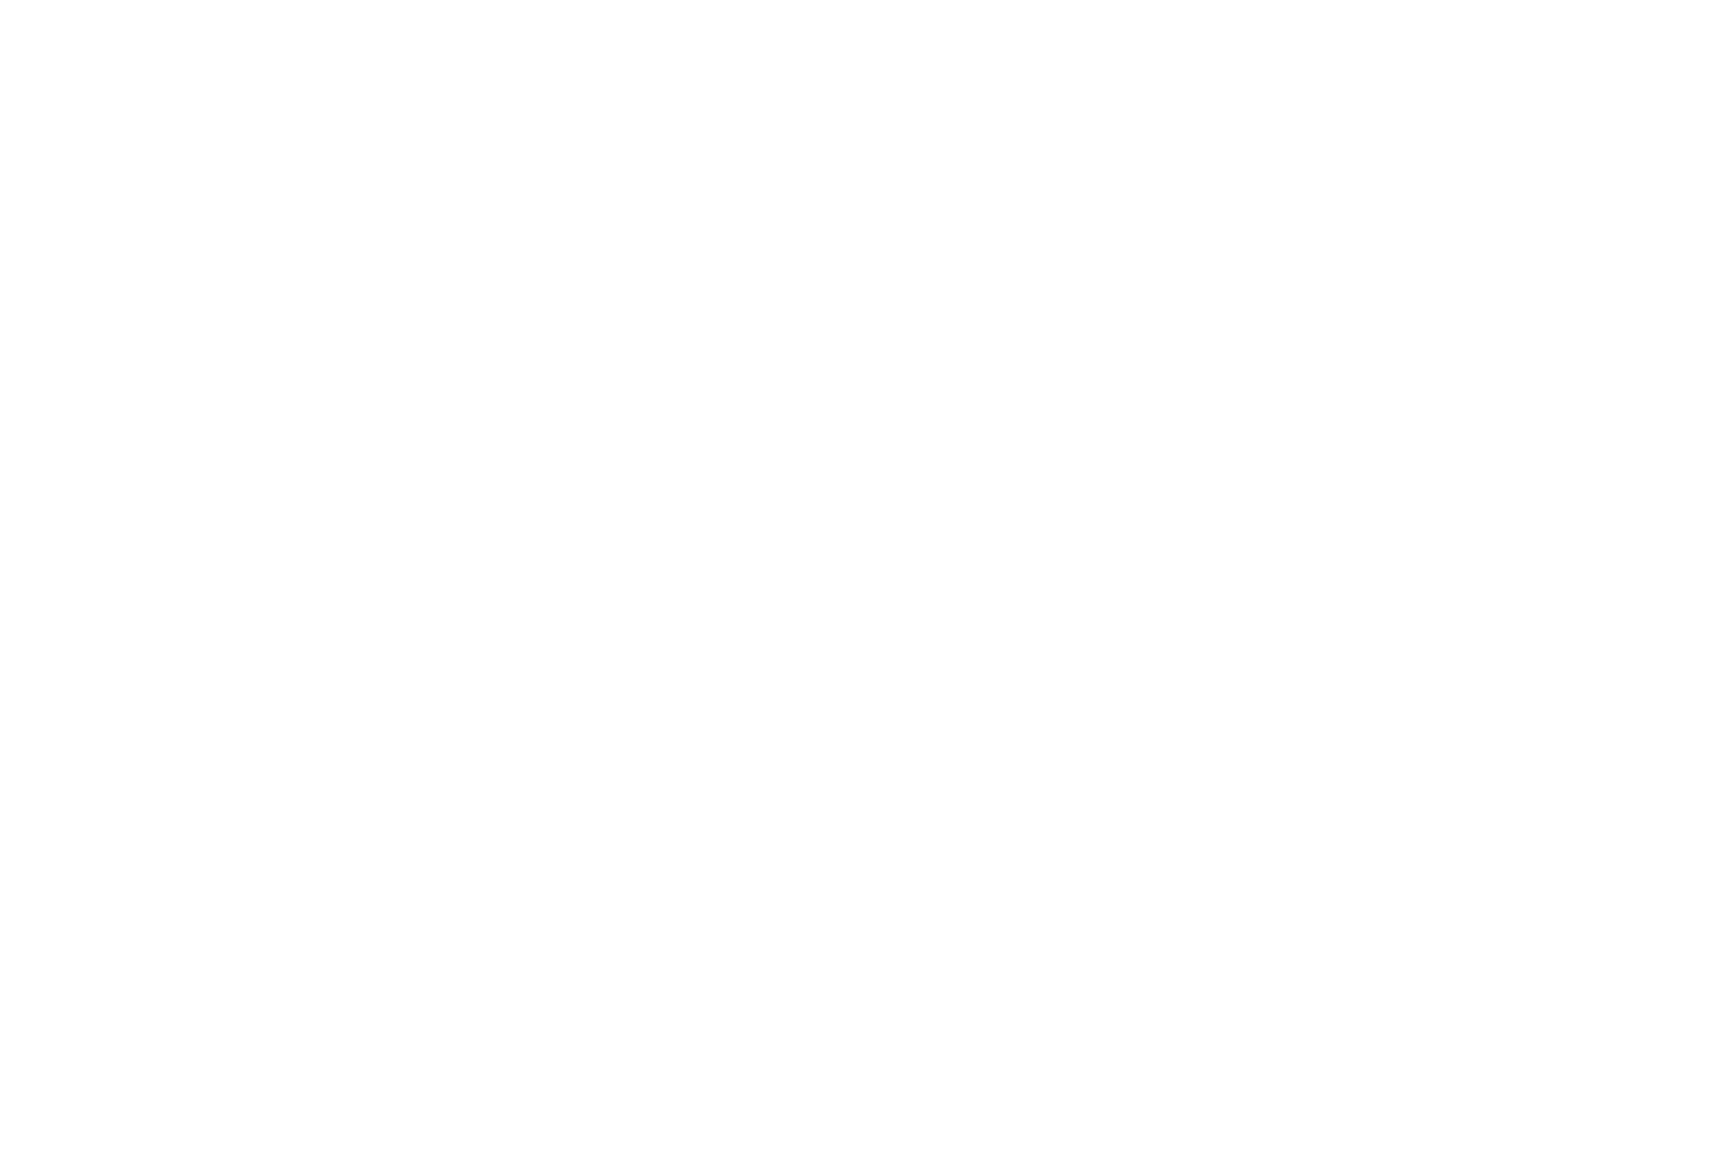 BEST DIRECTOR - Virginia Emerging Filmmakers Festival - 2021